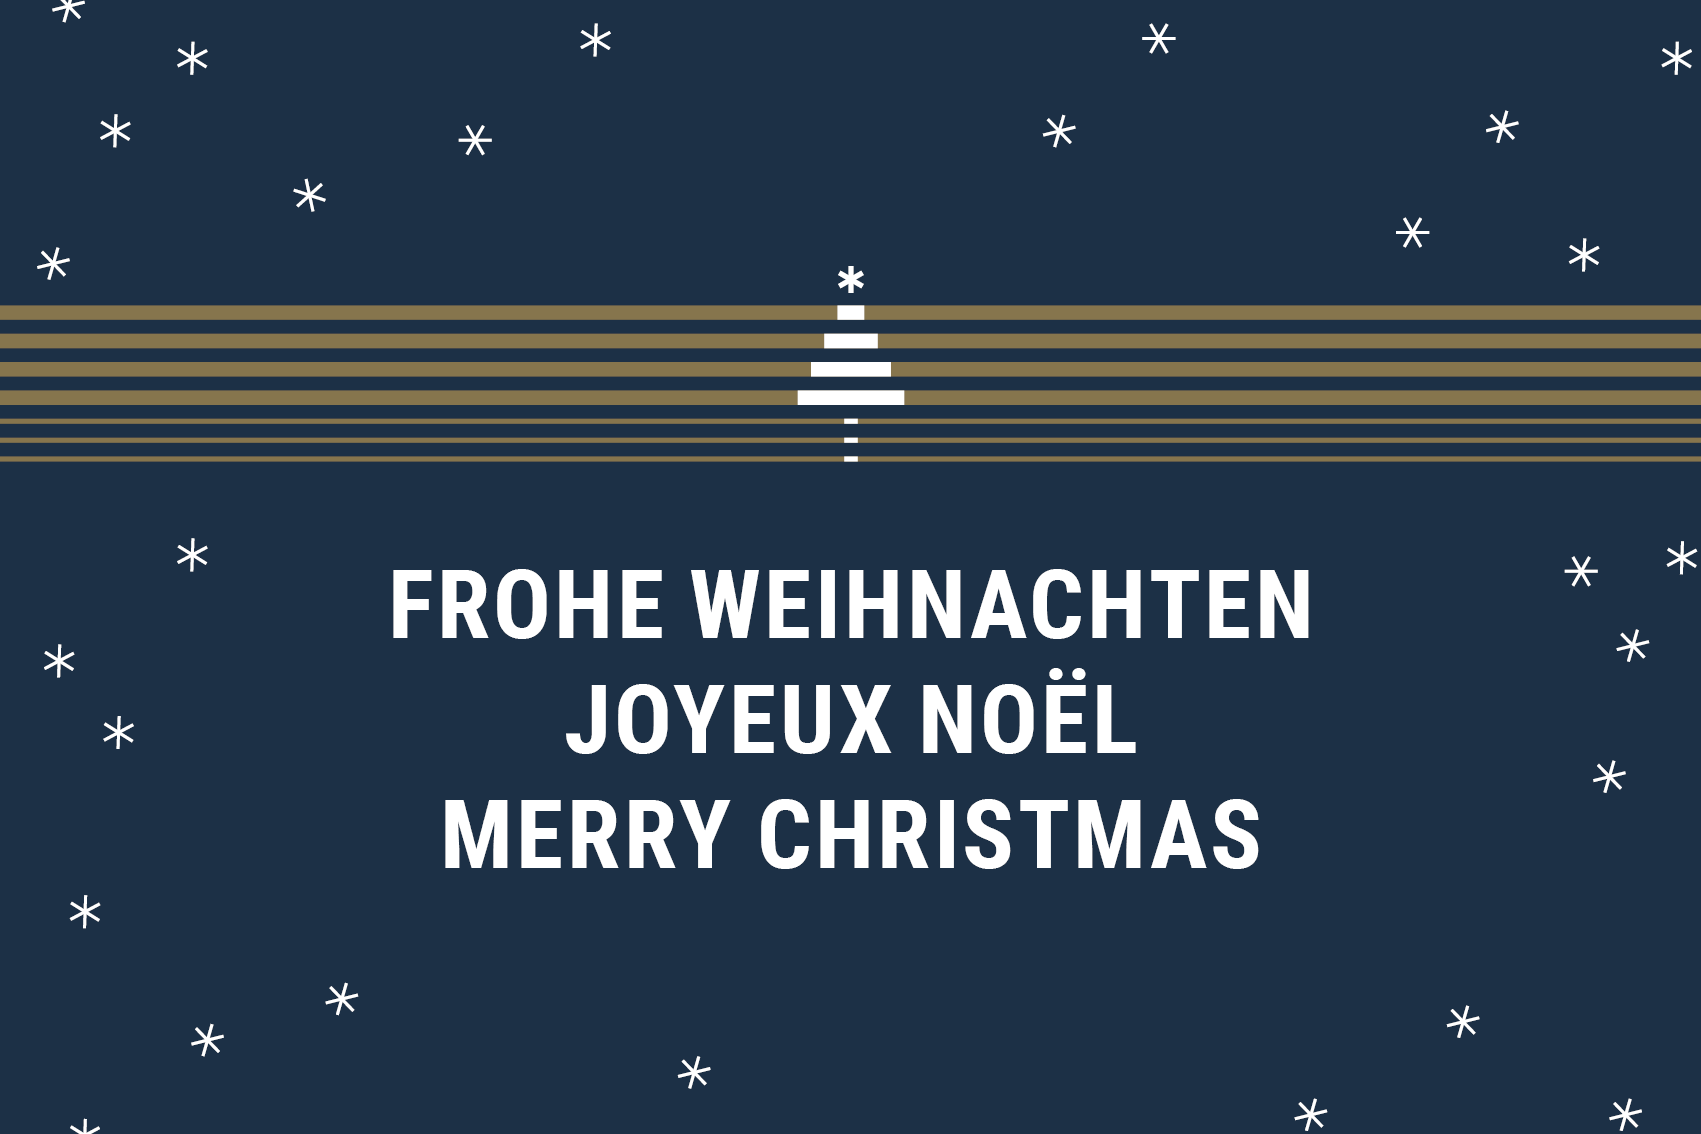 Frohe Weihnachten - Merry Christmas - Joyeux Noel